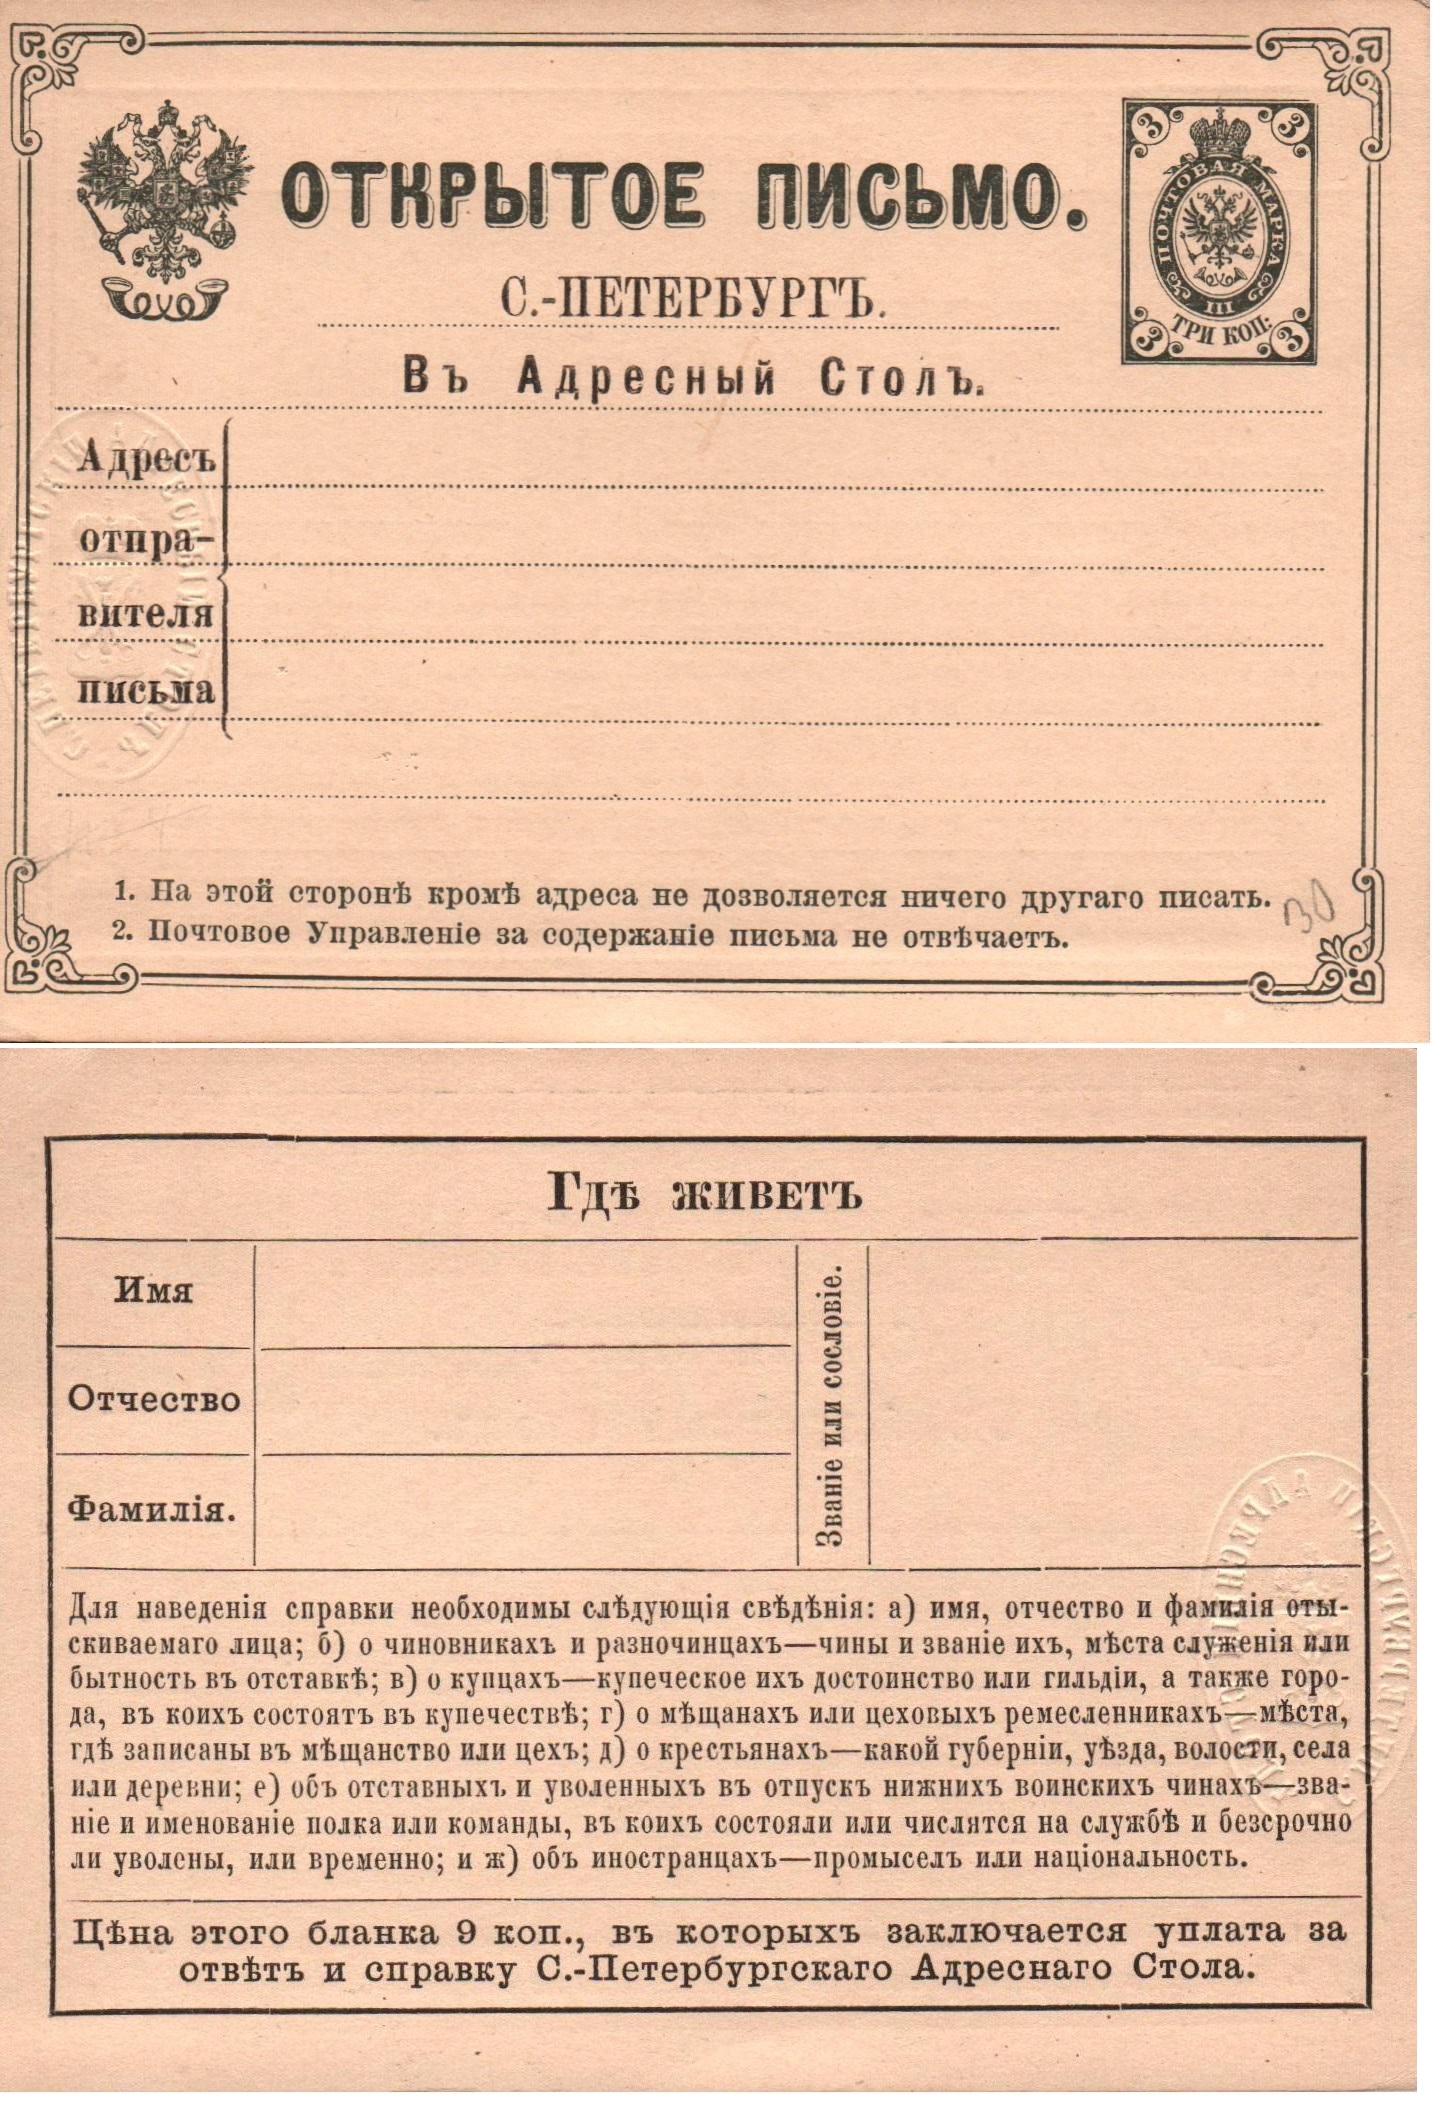 Postal Stationery - Imperial Russia Adress Request Postcard Scott 51 Michel AAK1 